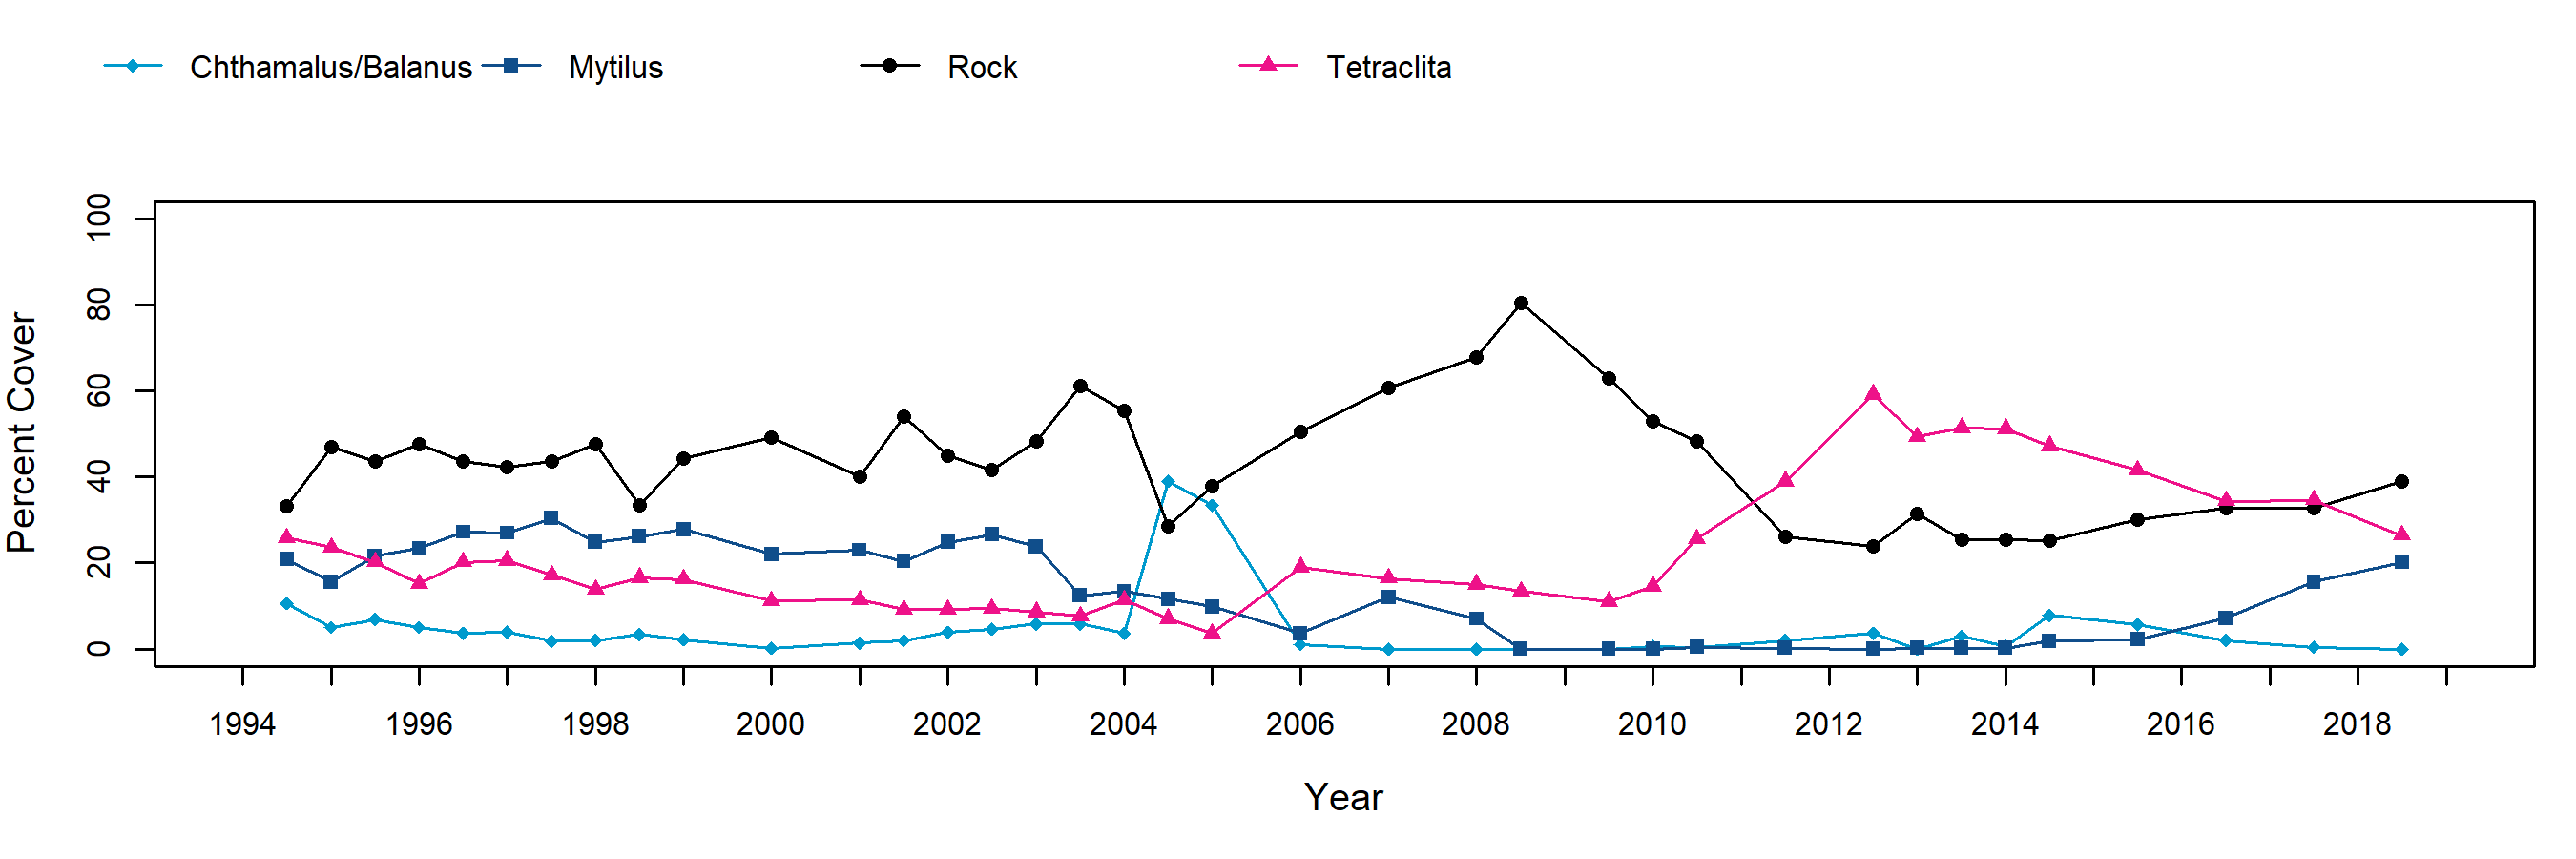 Scorpion Rock Tetraclita trend plot